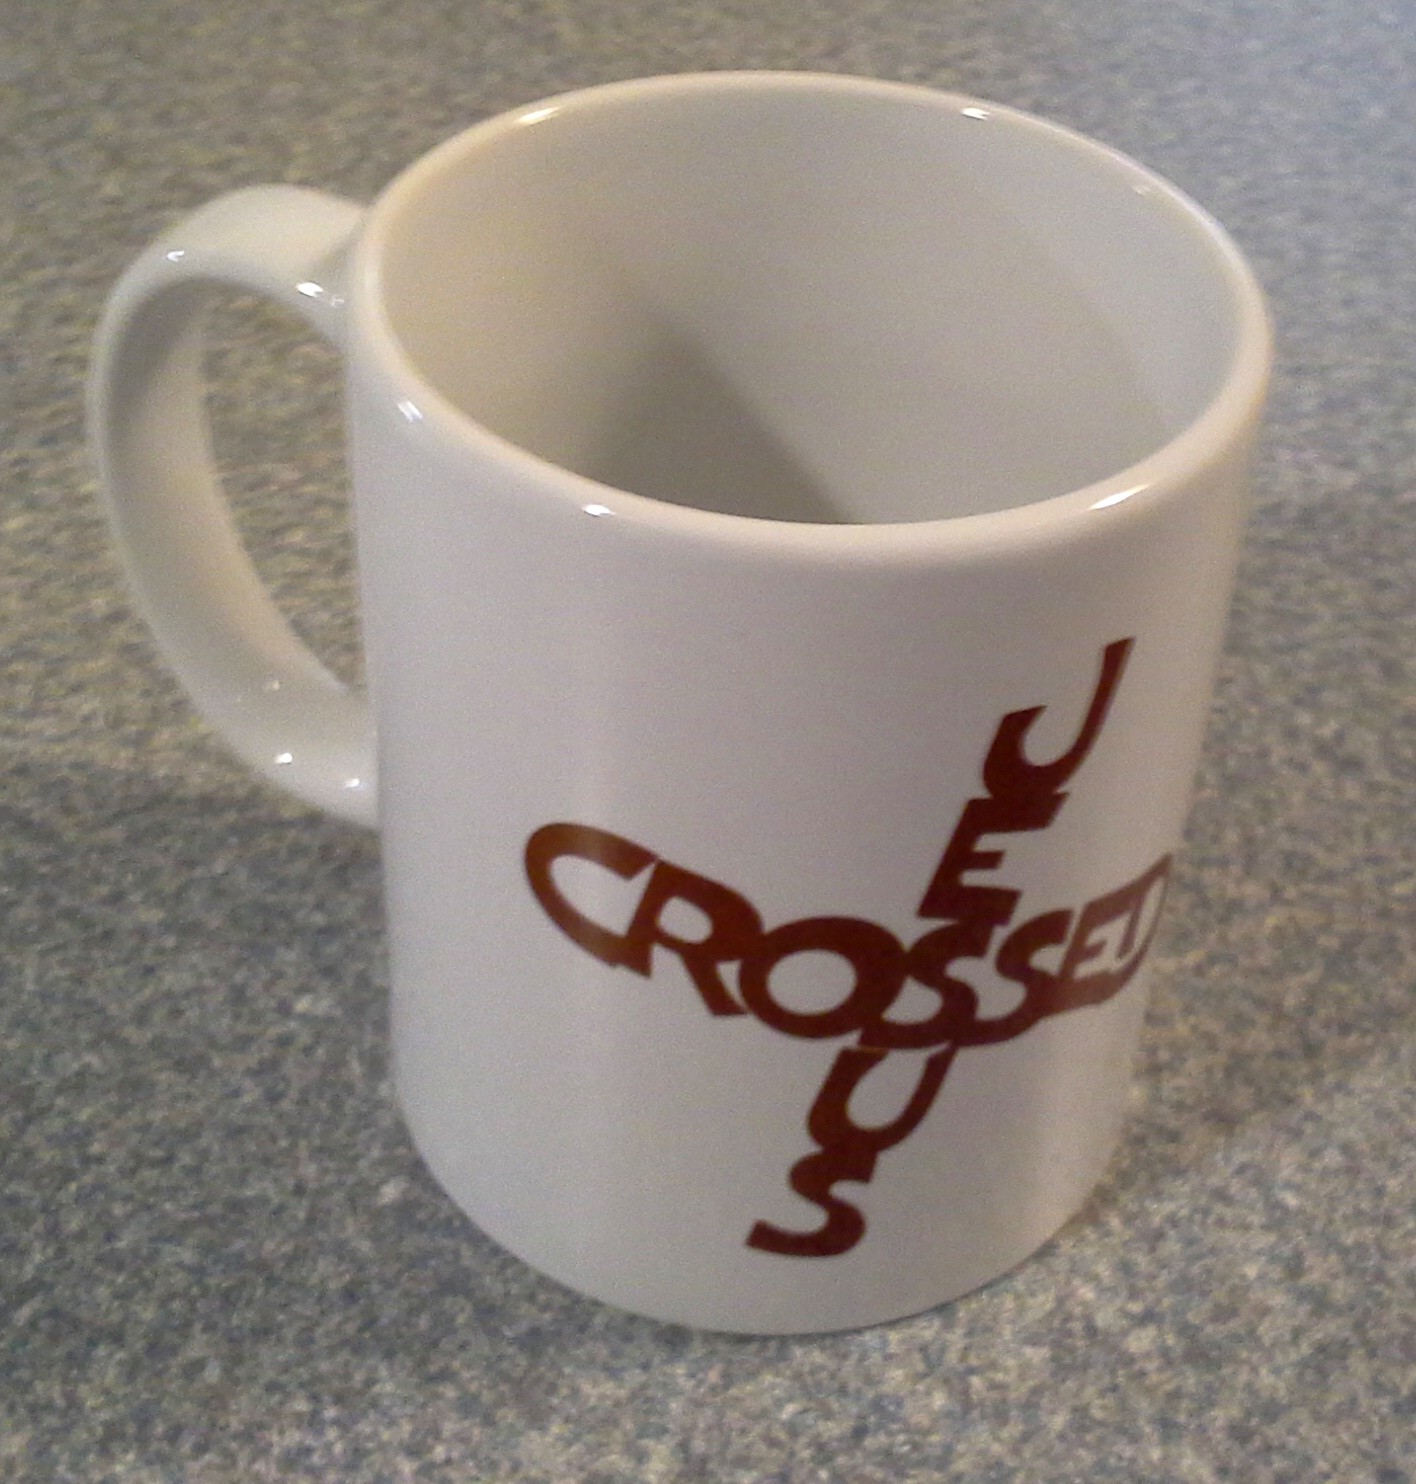 Jesus Crossed My Path mug